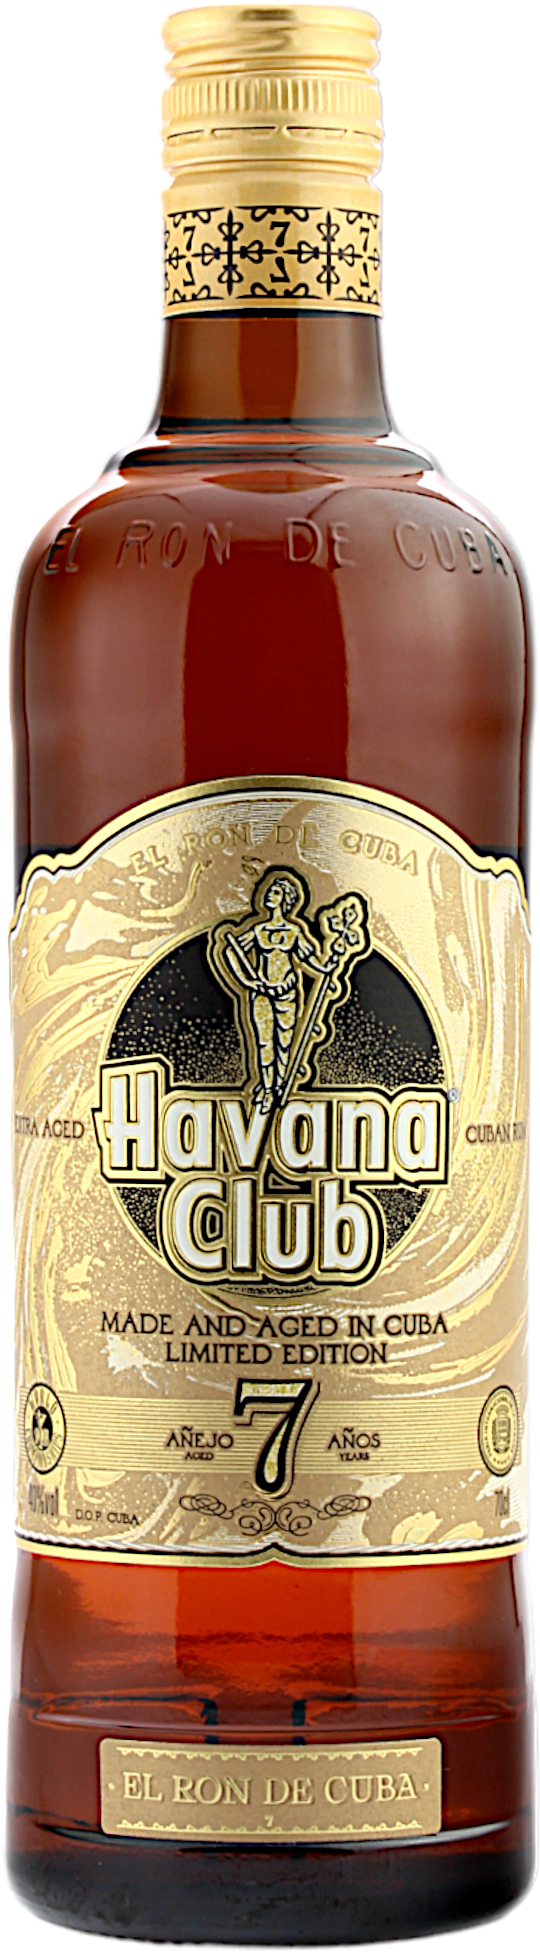 Havana Club Rum Anejo 7 Jahre Limited Edition